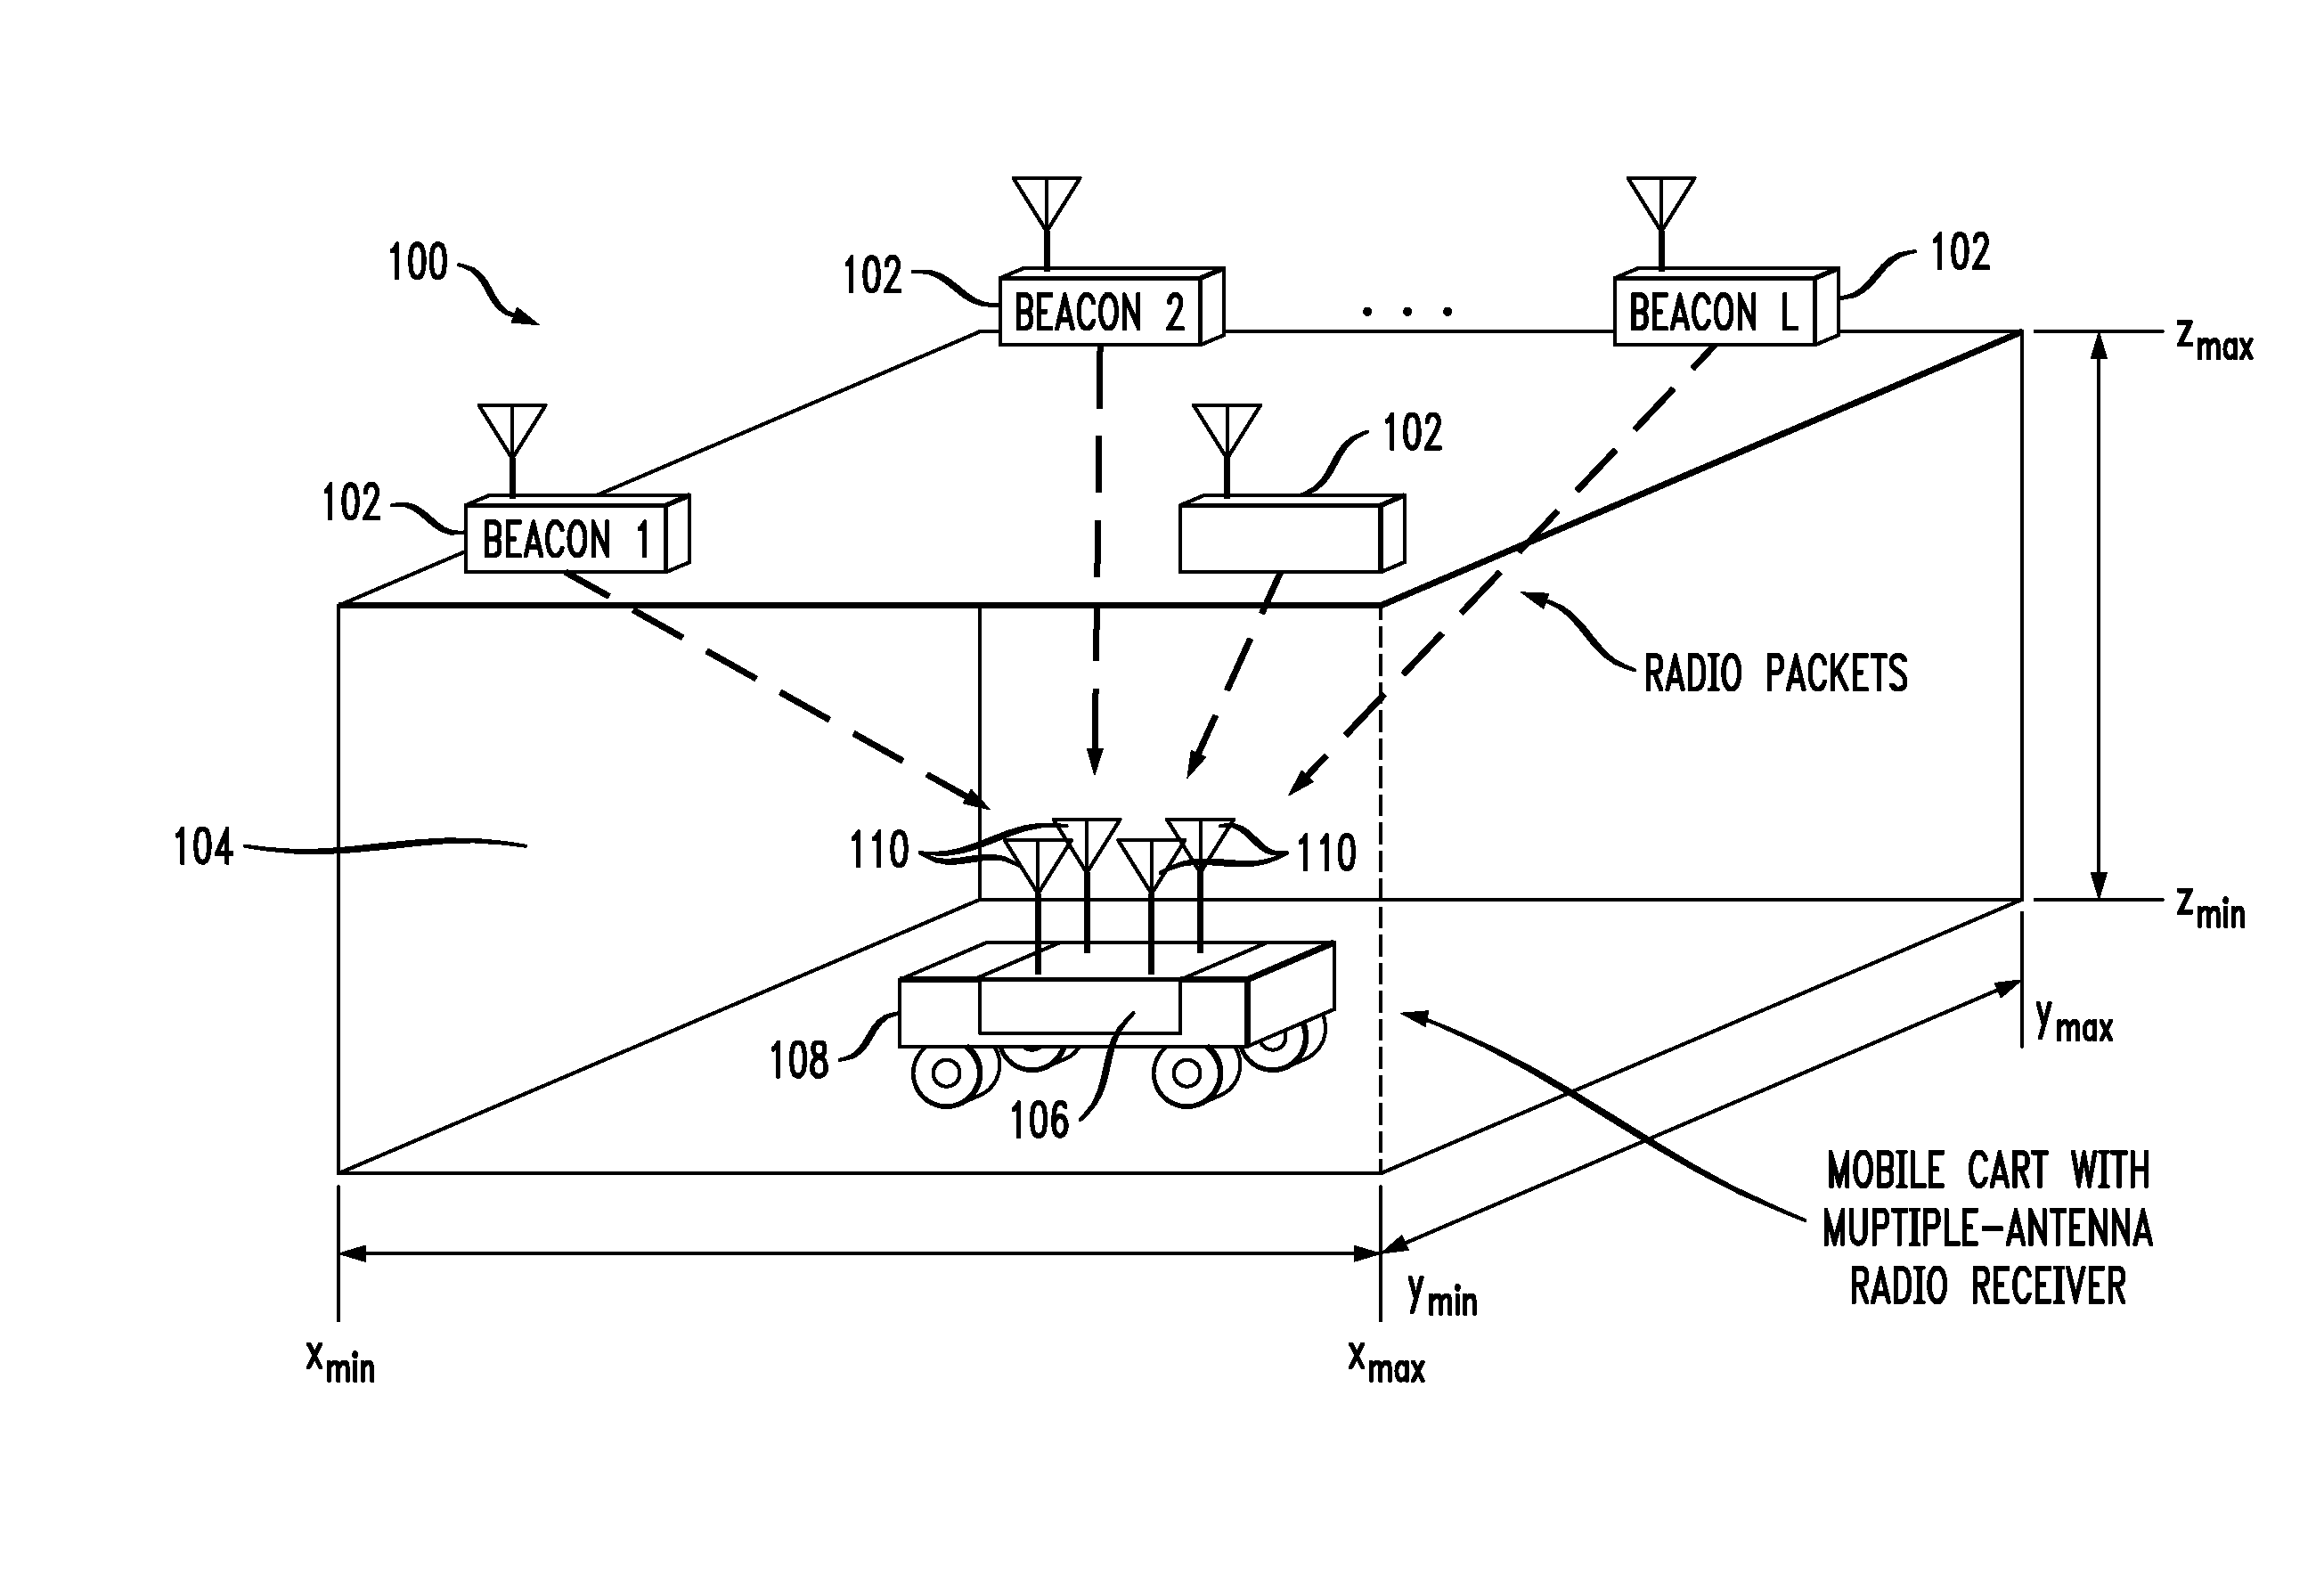 Apparatus and method for estimating location using multi-antenna radio receiver